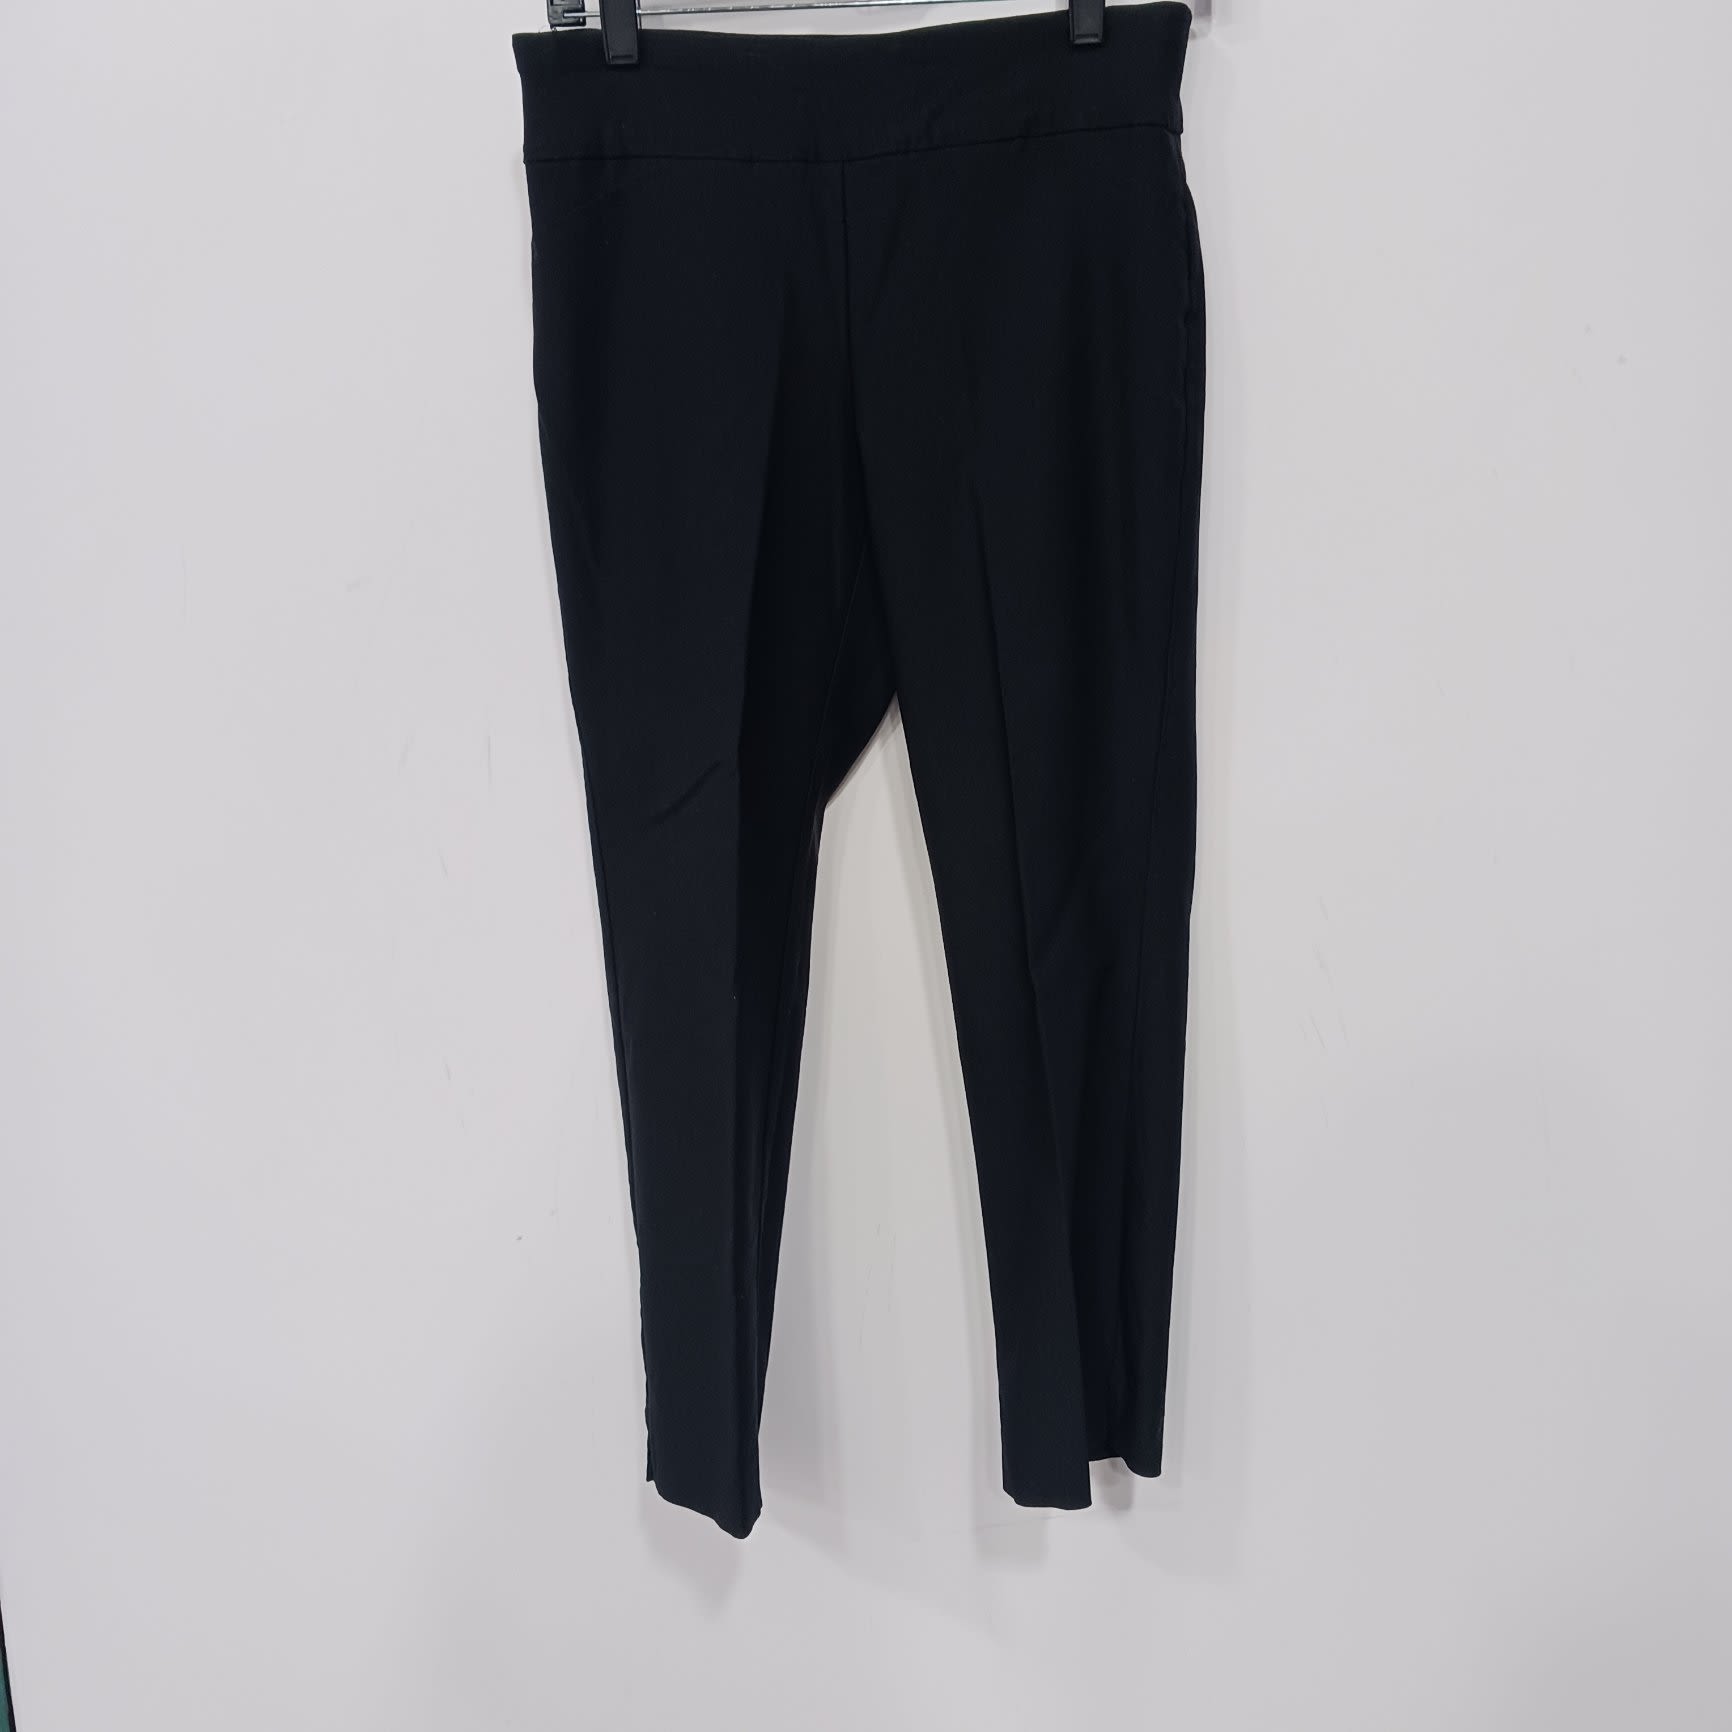 Buy the Women's Charter club Black Cambridge Slim Dress Pants Size 6PS ...